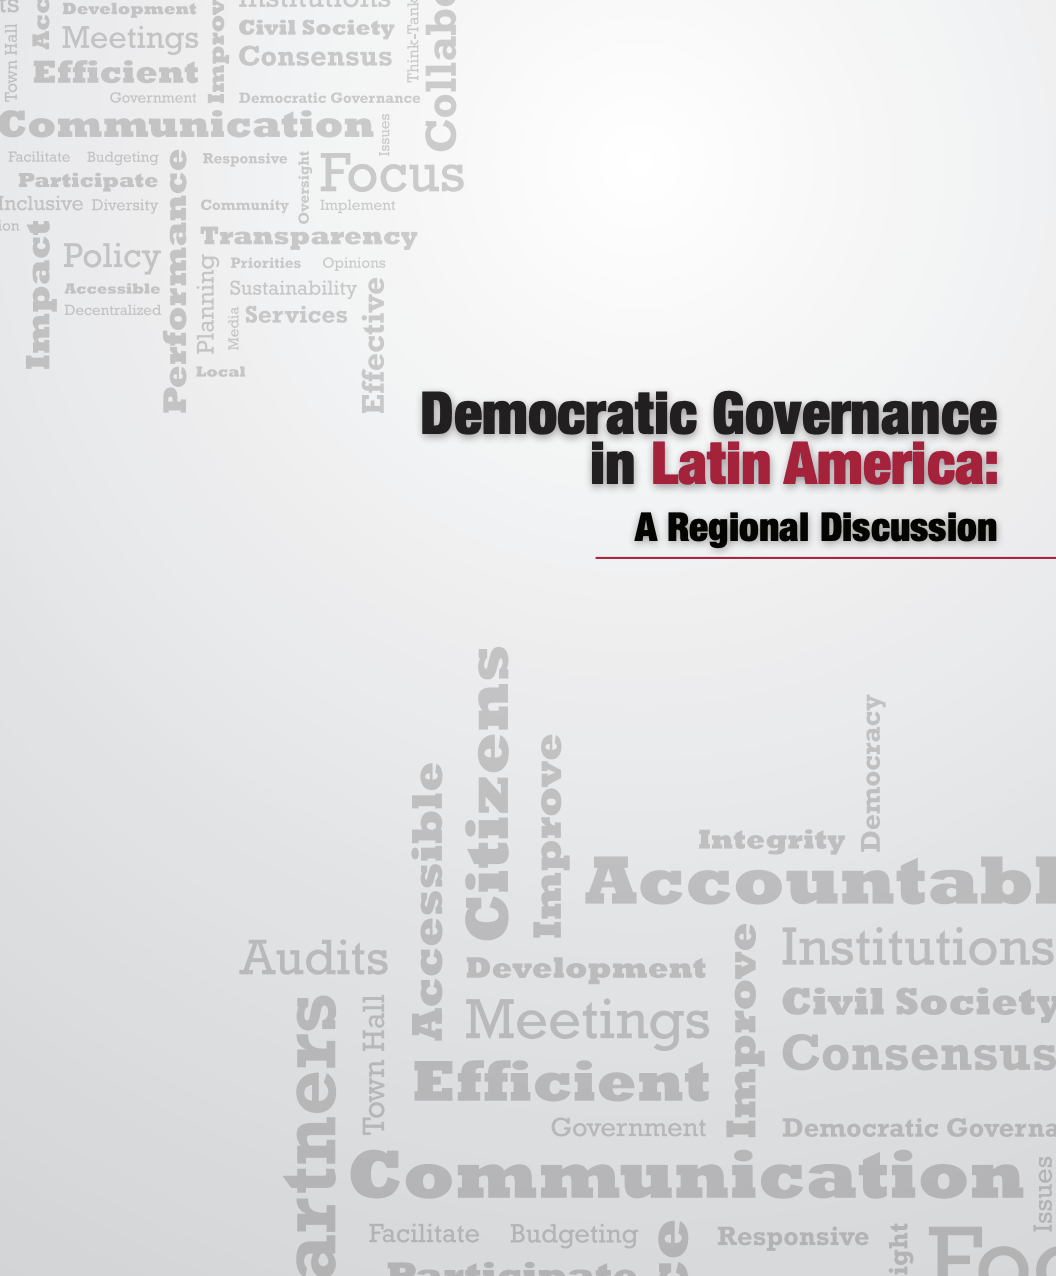 Democratic Governance in Latin America: A Regional Discussion